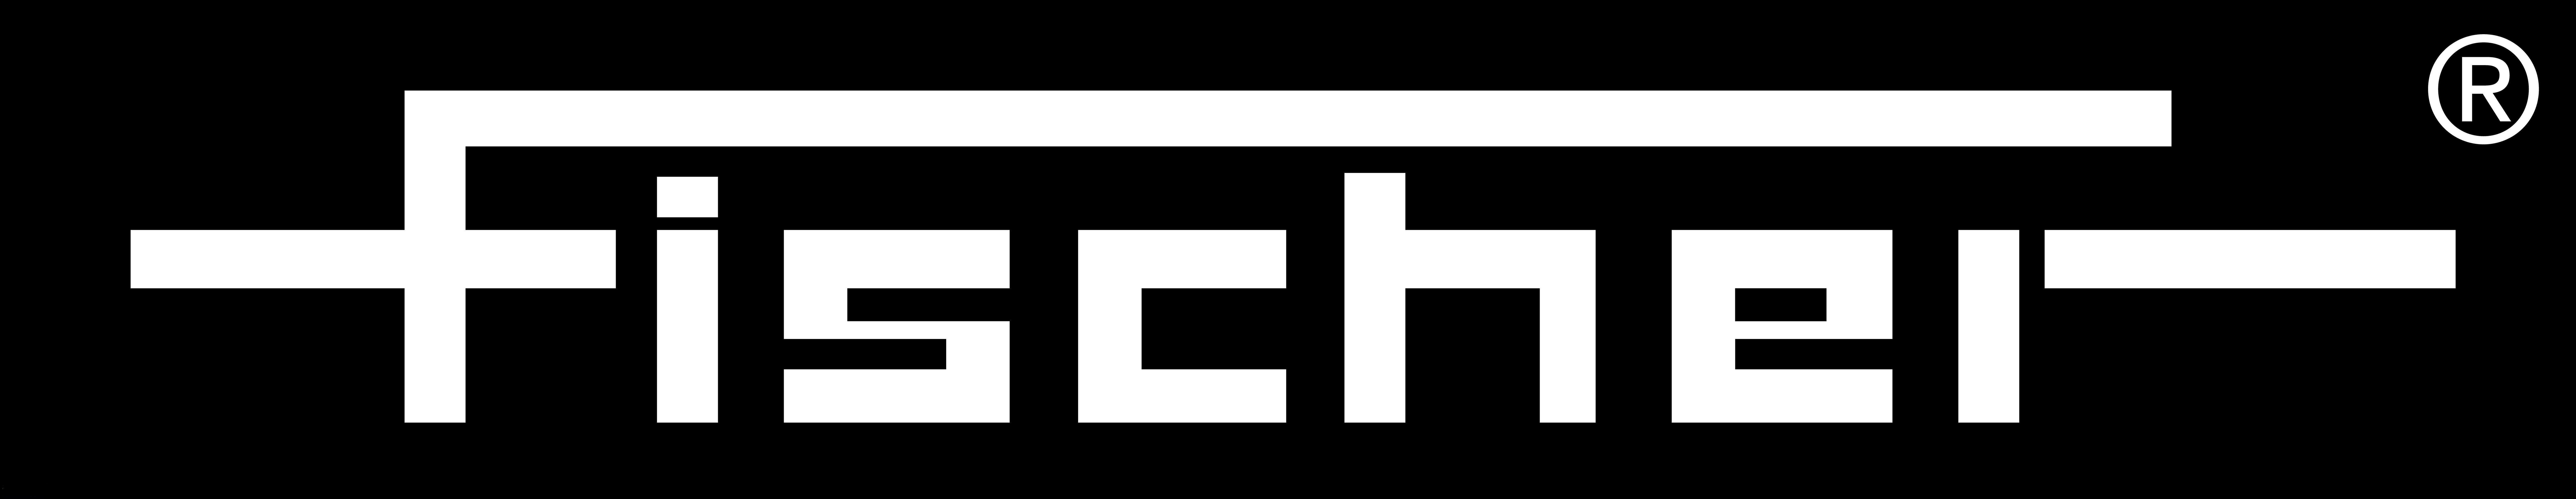 Fischer Logo - File:Fischer Logo.jpg - Wikimedia Commons